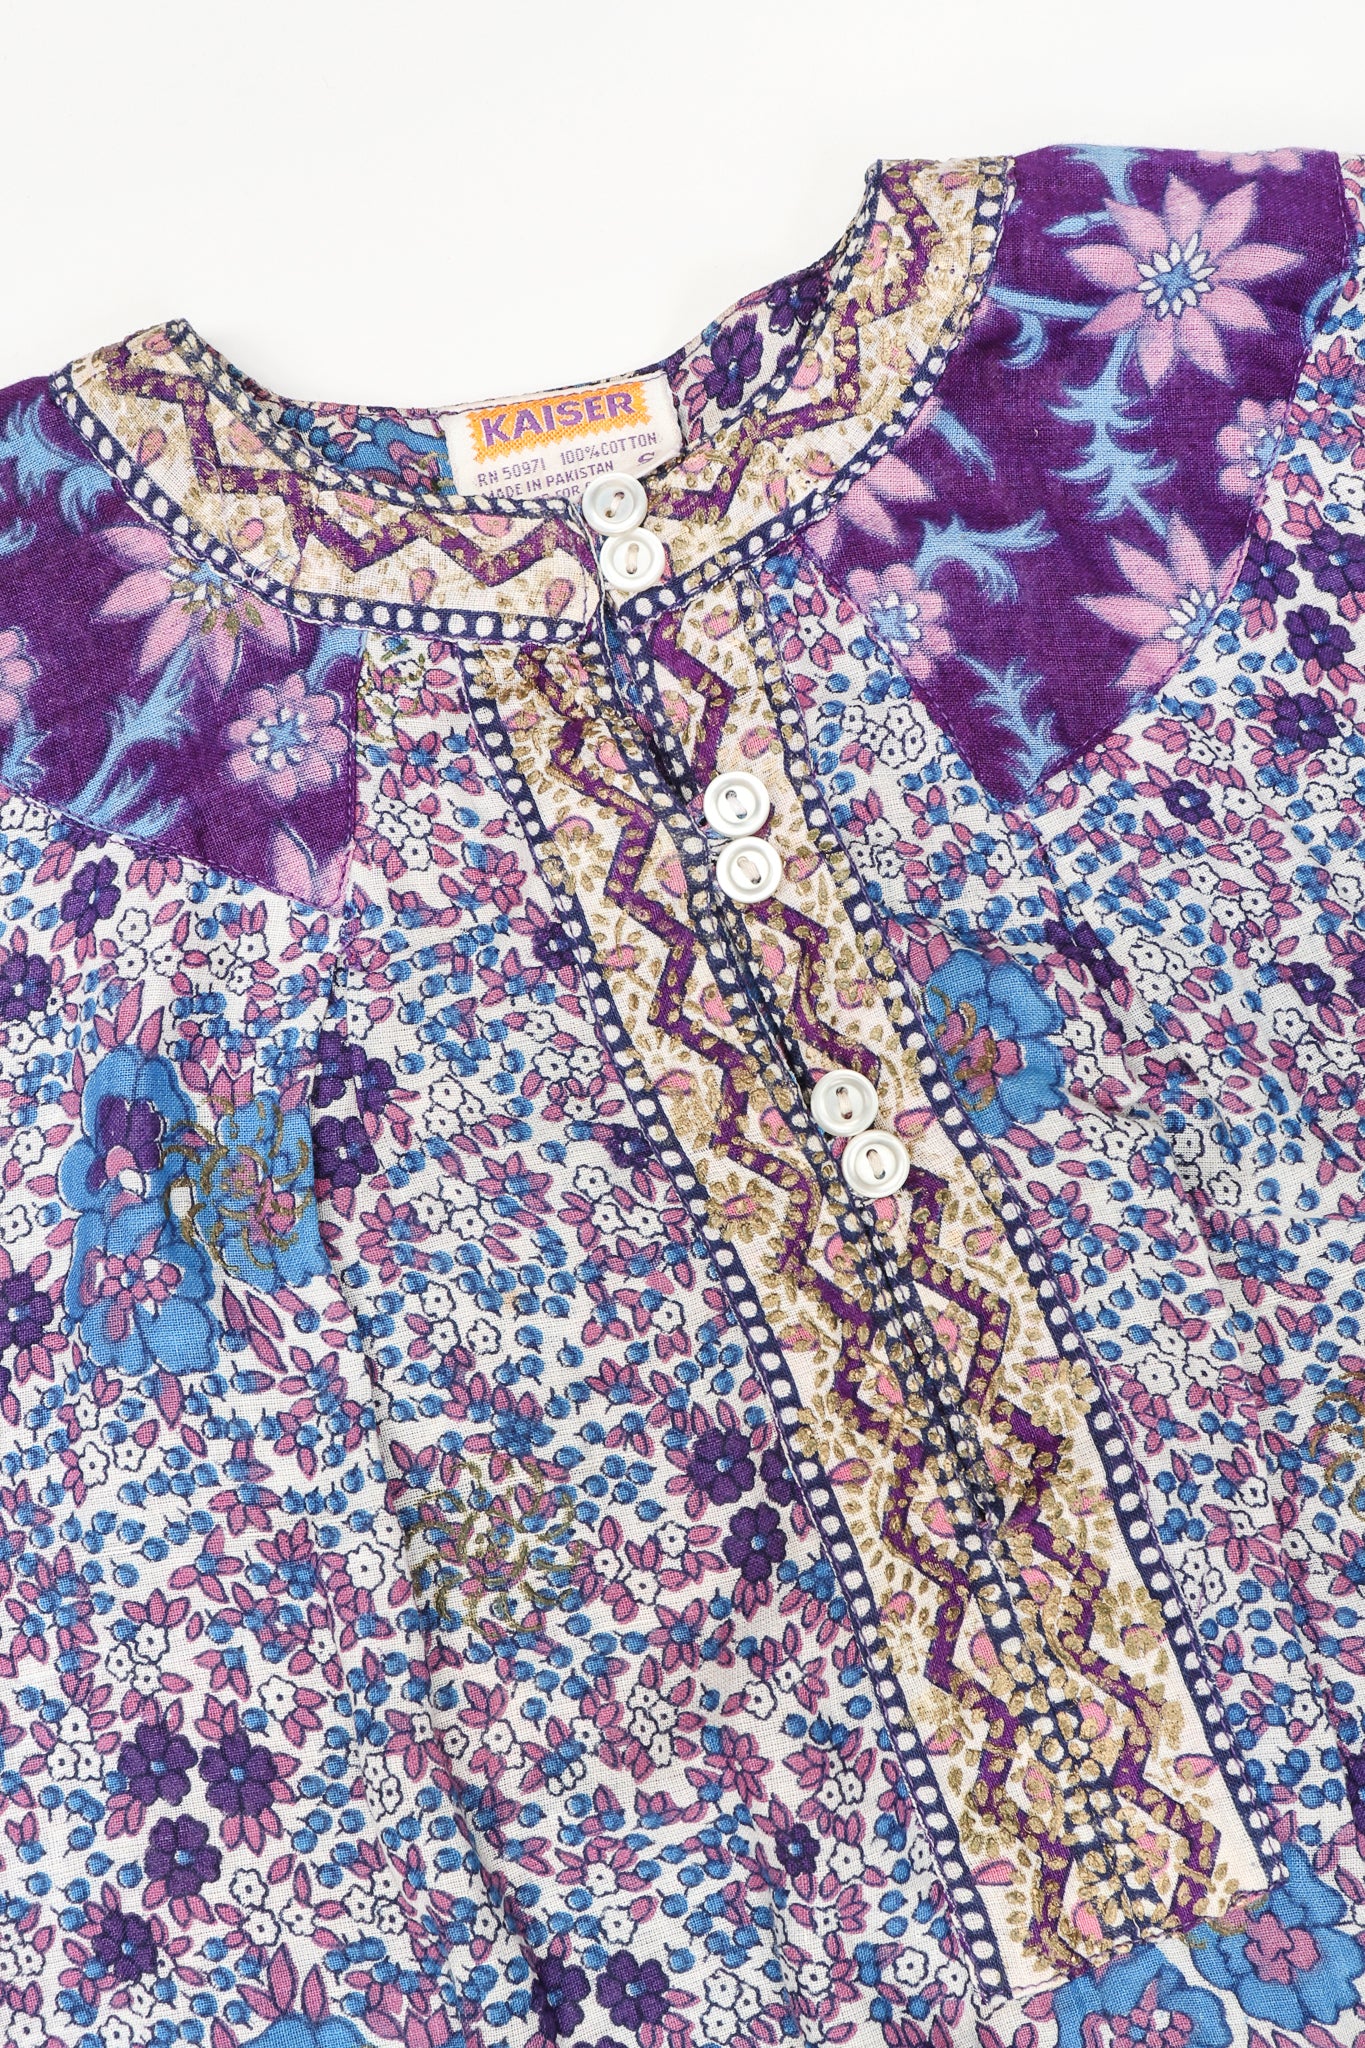 Recess Los Angeles Designer Consignment Vintage Kaiser Gauzy Boho Indian Peasant Dress